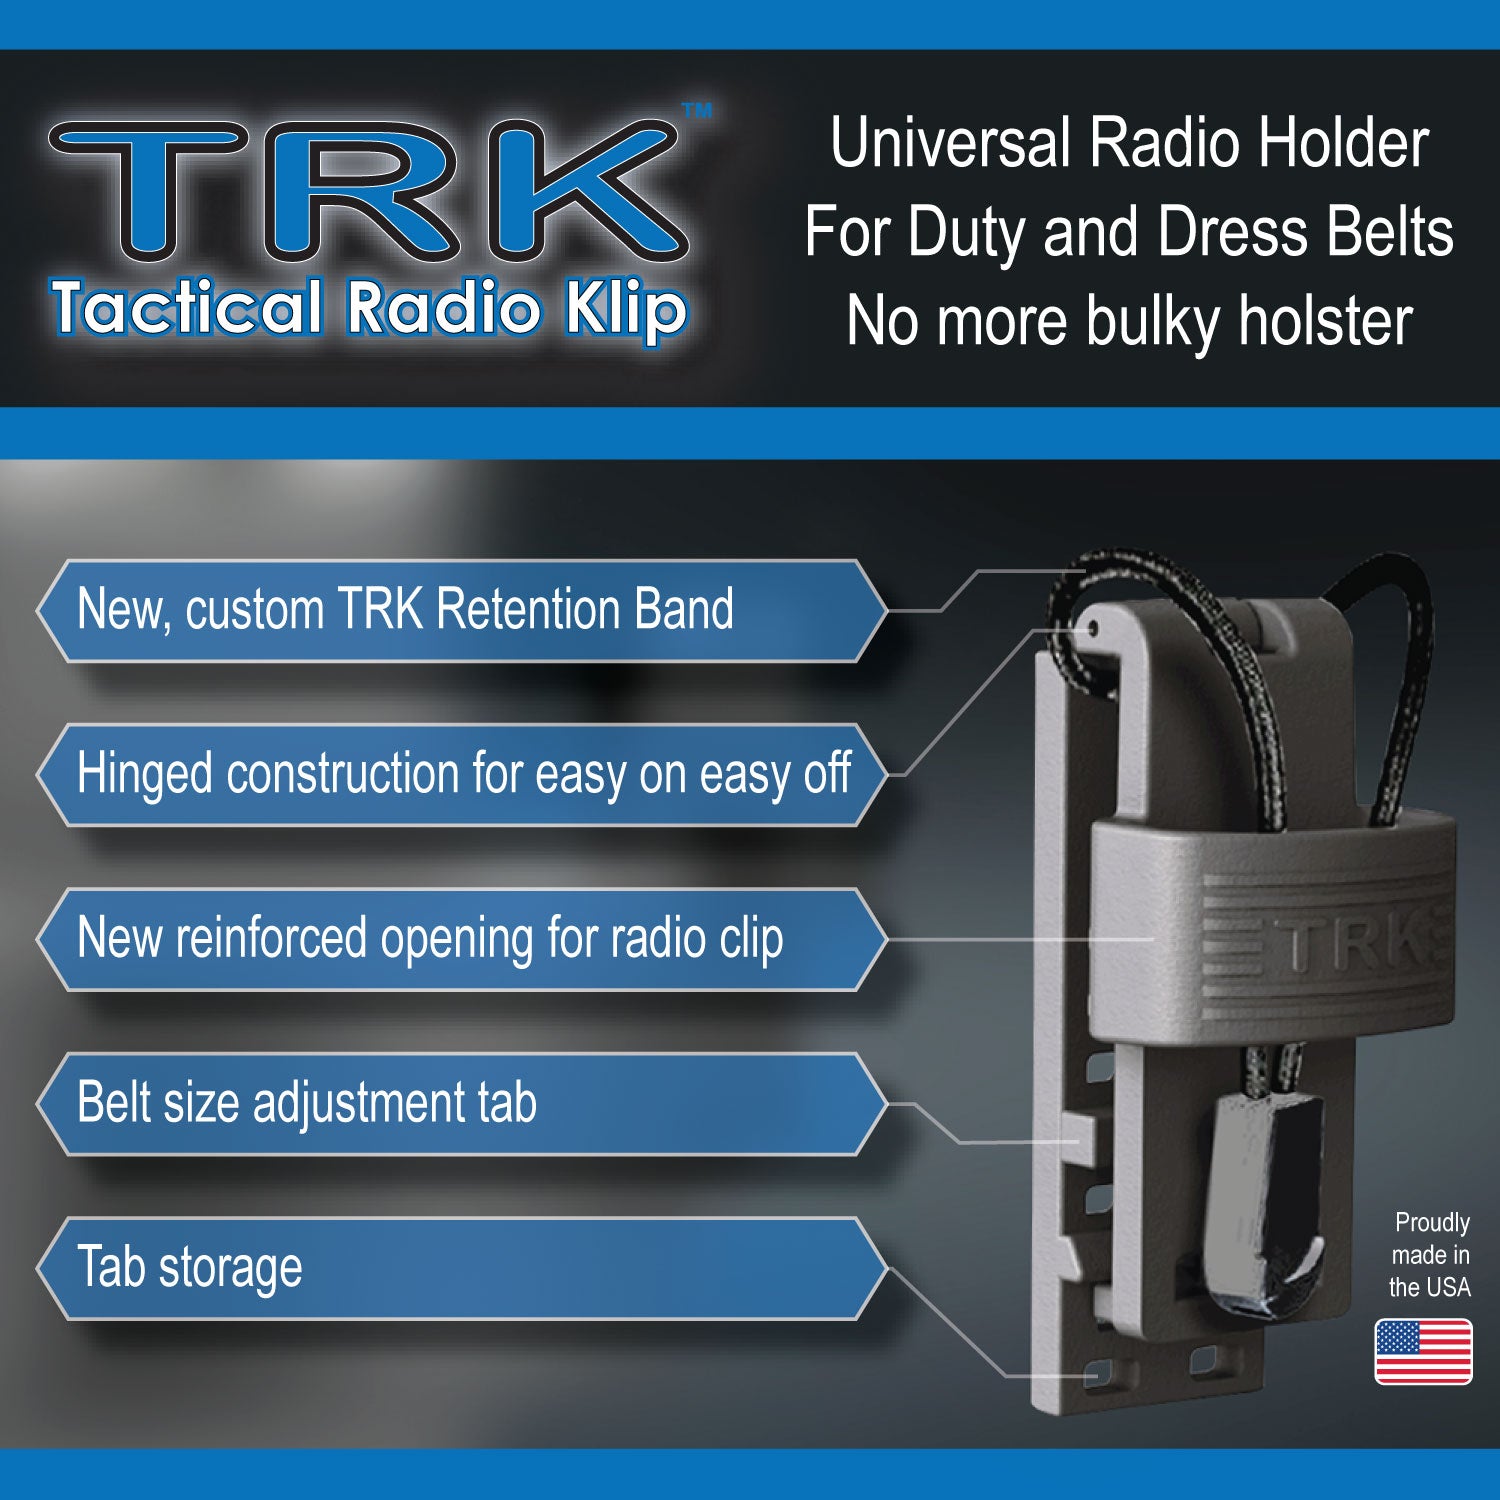 Tactical Radio Klip Universal Radio Holder